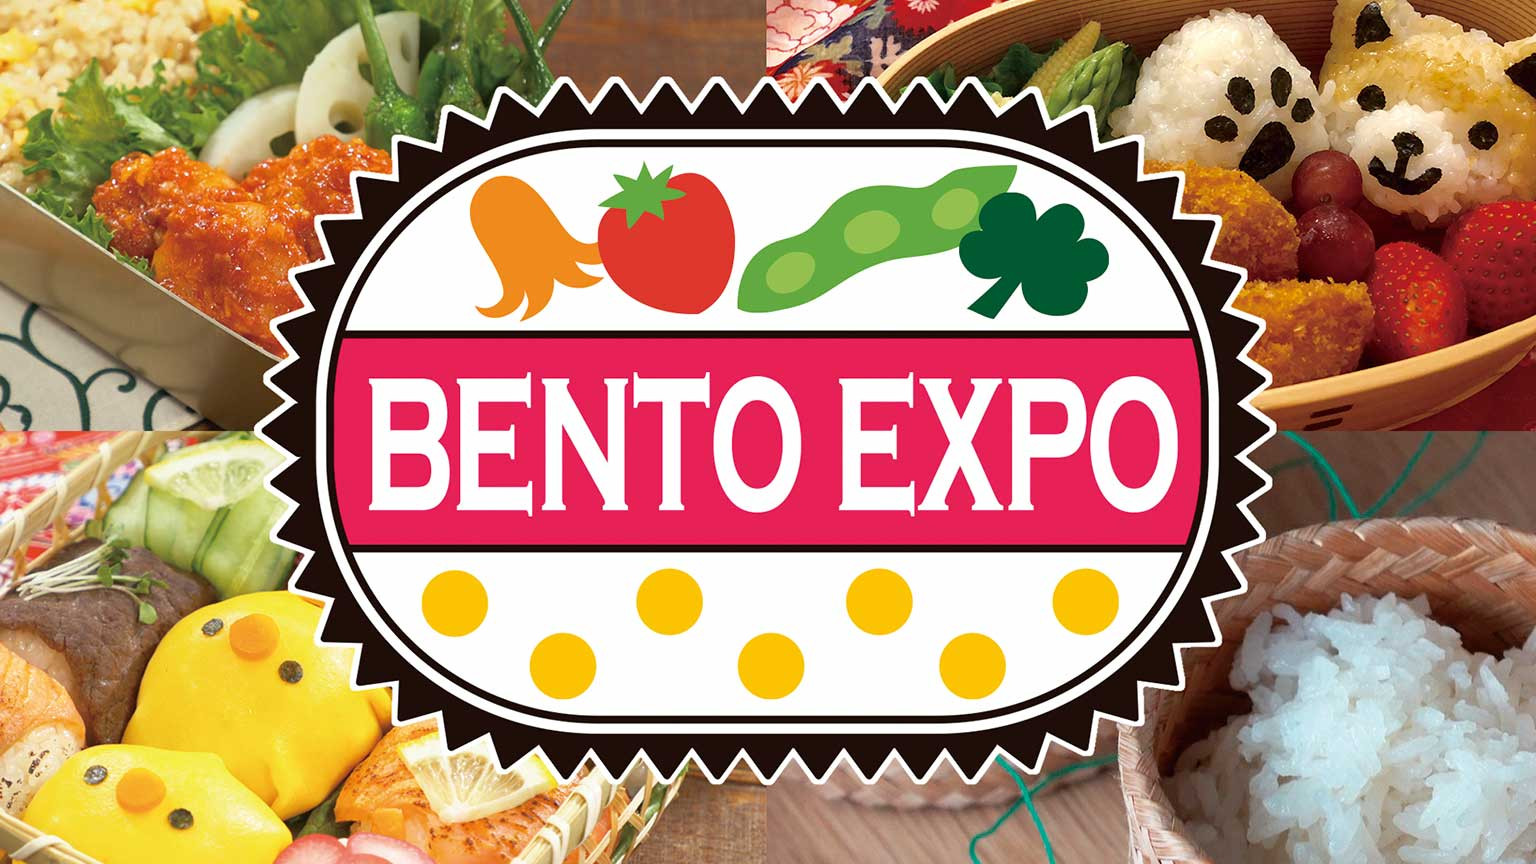 便当世博
BENTO EXPO